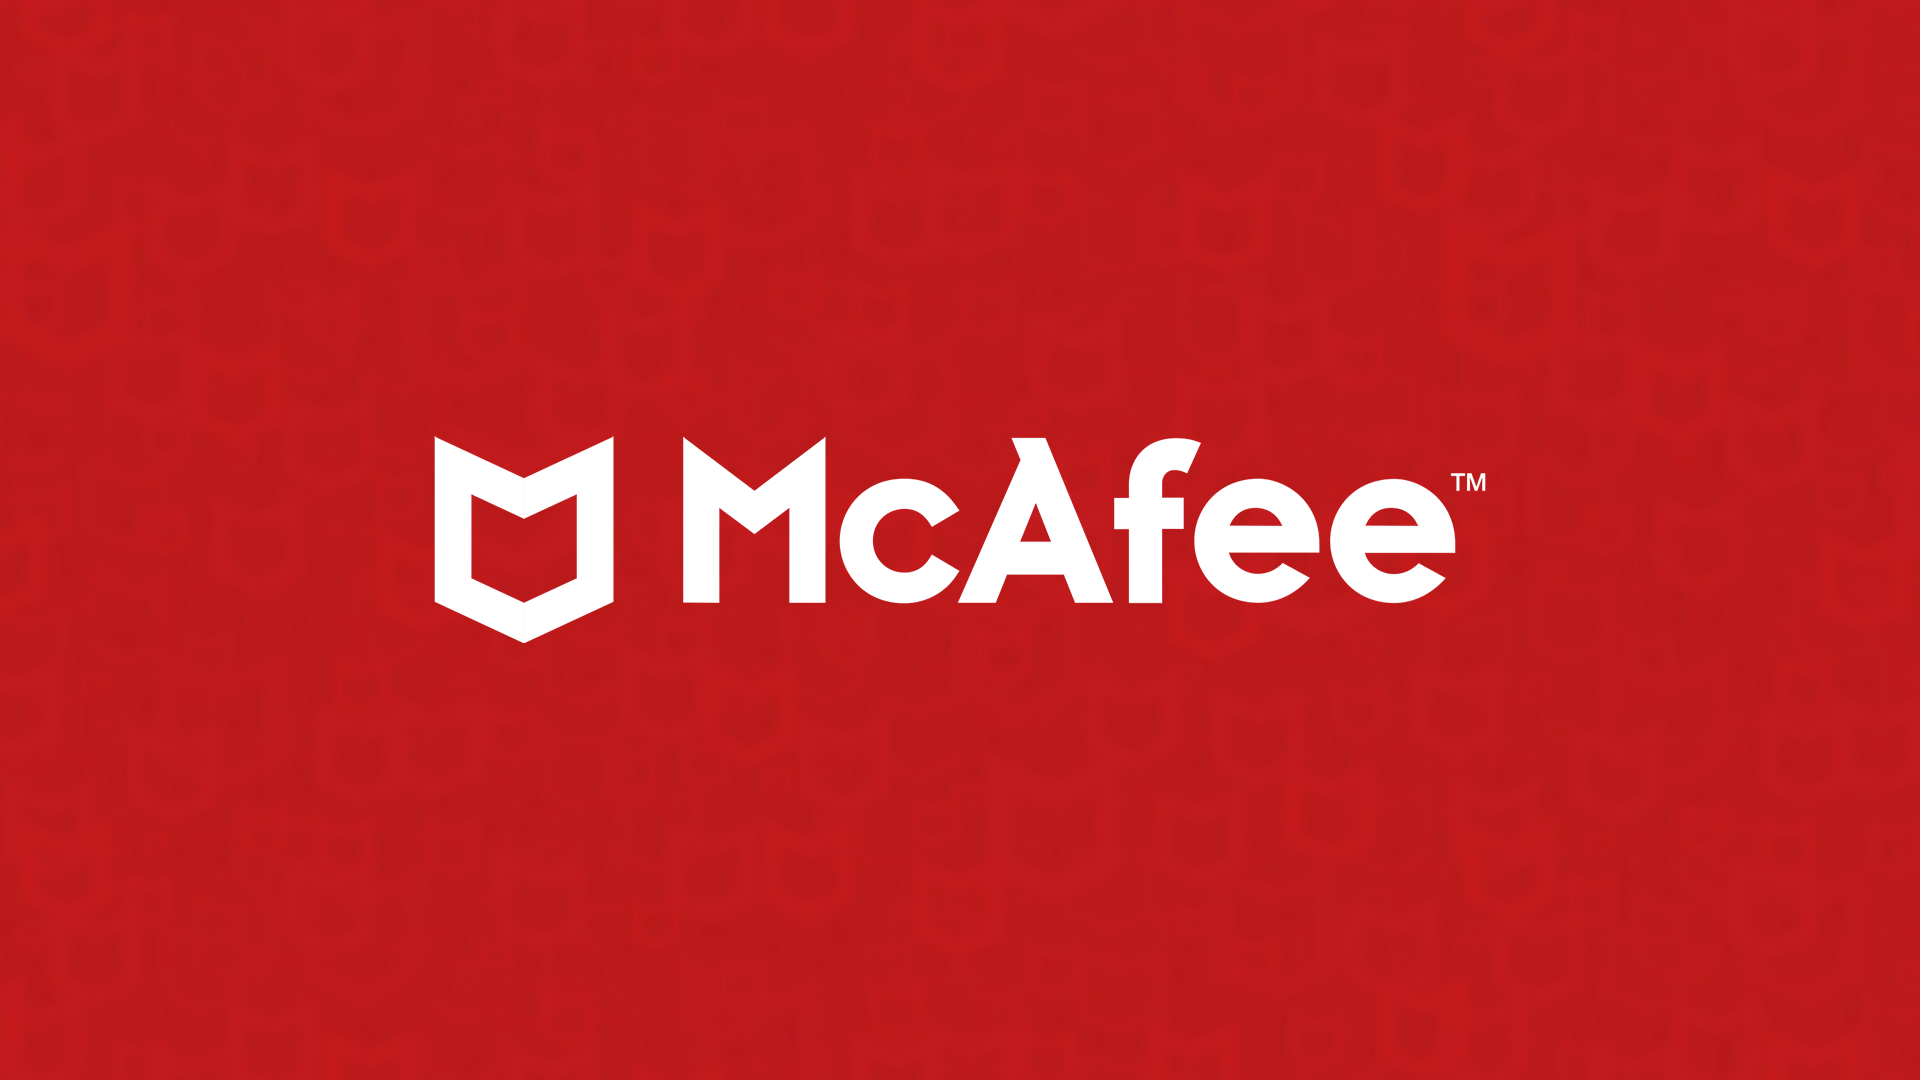 mcafee-webinar-adaptable-security-for-flexible-working-environments